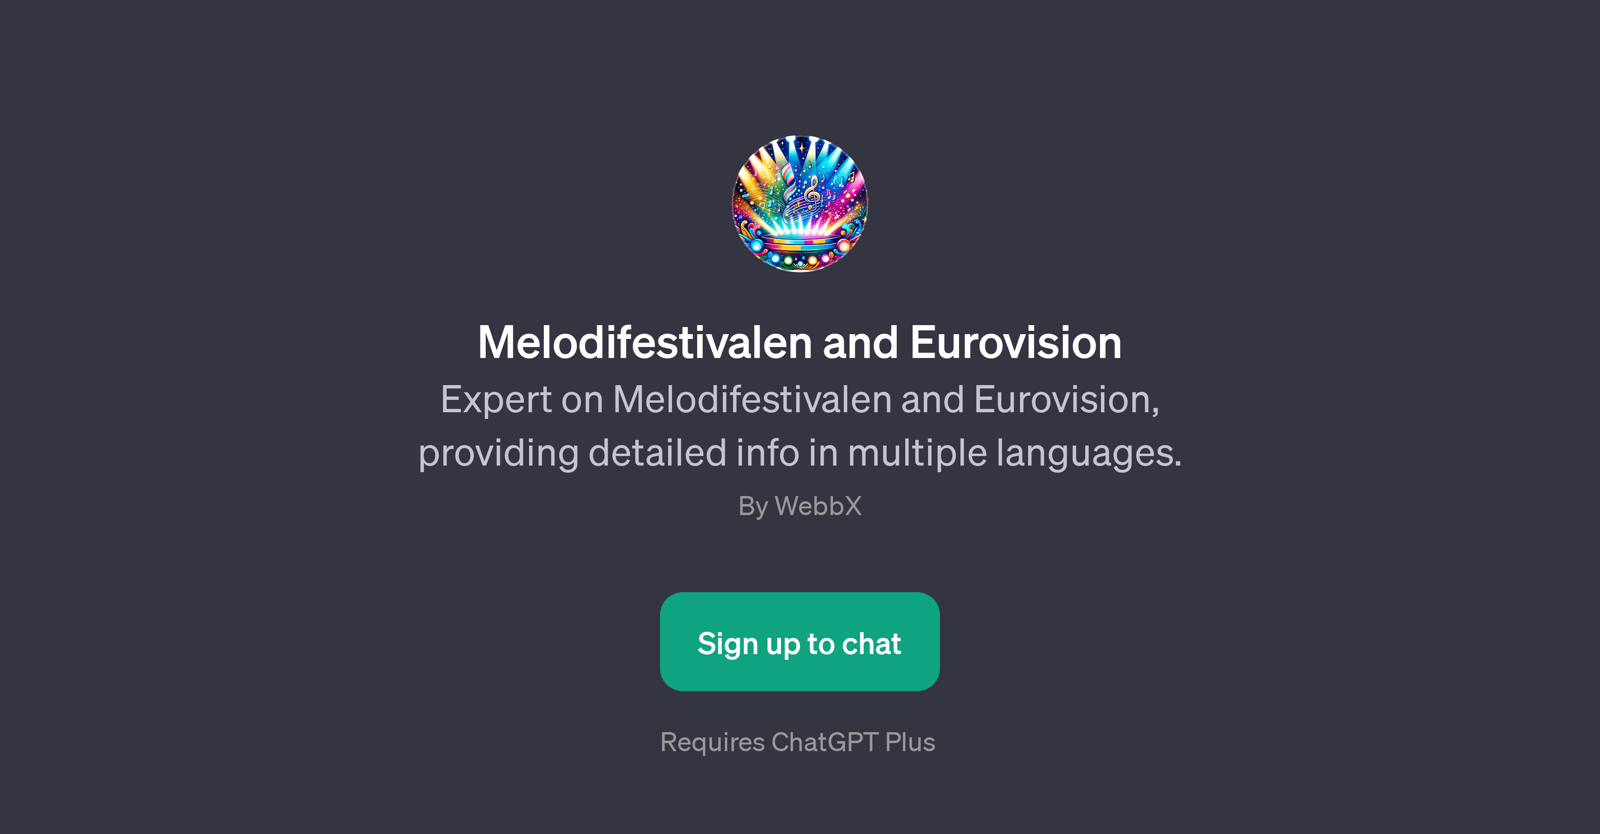 Melodifestivalen and Eurovision website